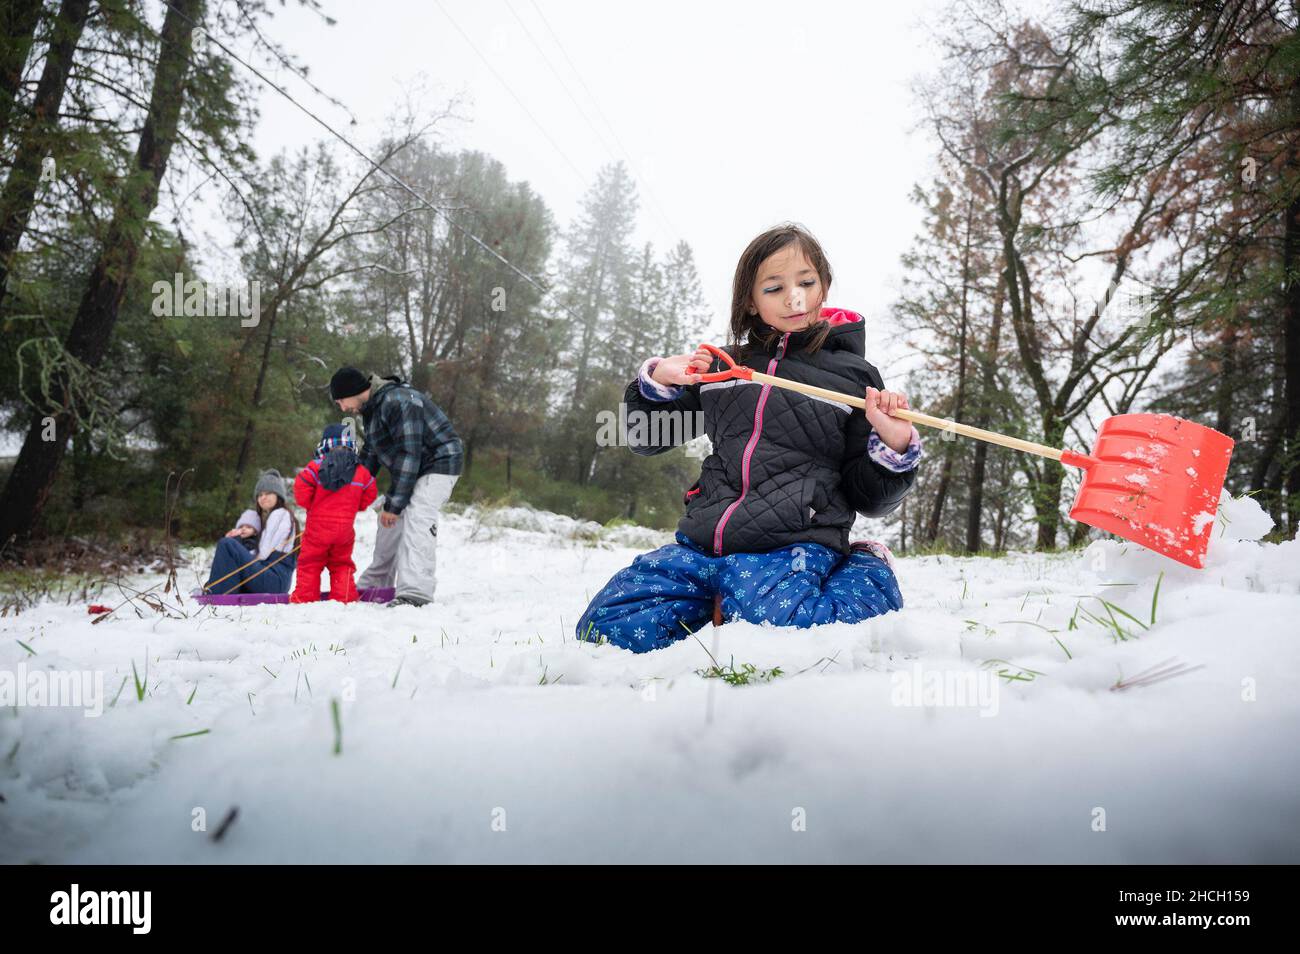 USA. 27th Dec, 2021. Hadleigh Caron, 8, of Carmichael, California shovels snow as her family sleds in the snow near Applegate on Monday, Dec. 27, 2021. (Photo by Hector Amezcua/The Sacramento Bee/TNS/Sipa USA) Credit: Sipa USA/Alamy Live News Stock Photo